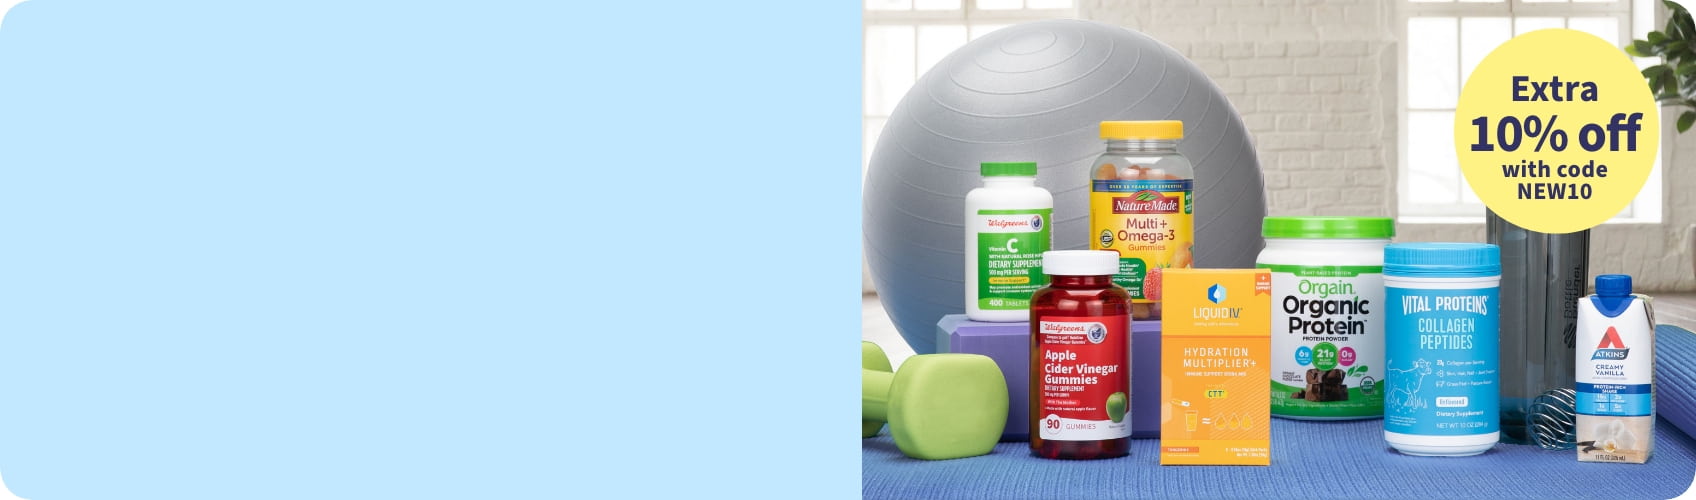 Walgreens - Buy 1 Get 1 50% off Vitamins & Supplements